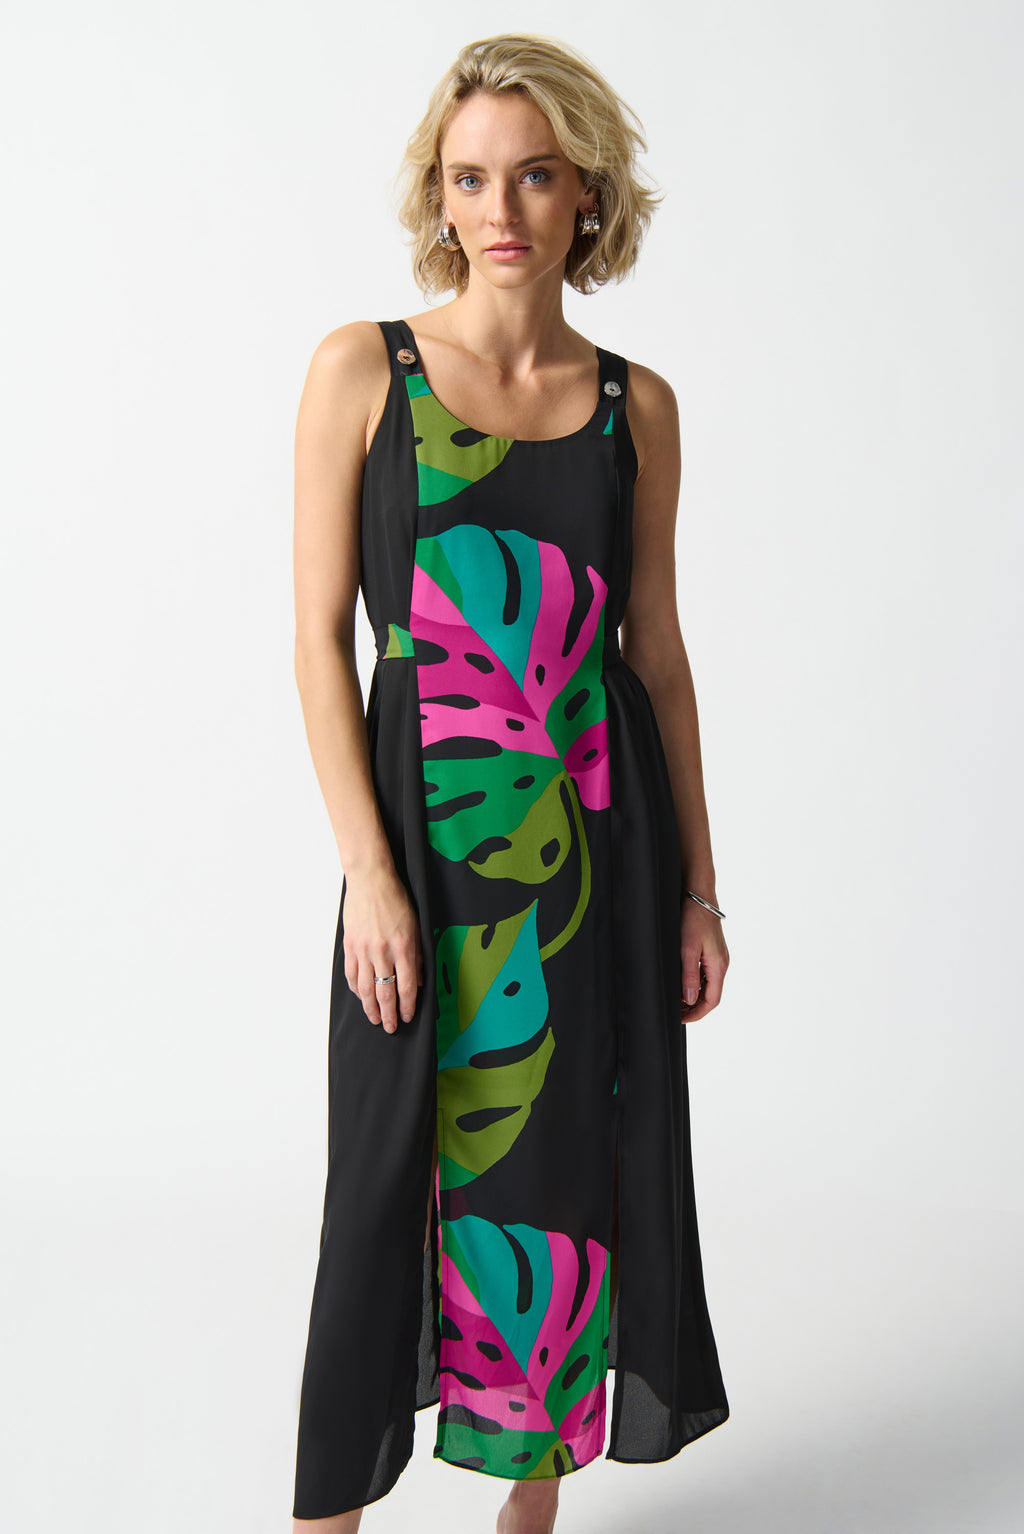 Joseph Ribkoff Black/Multi Tropical Print Dress Style 242163